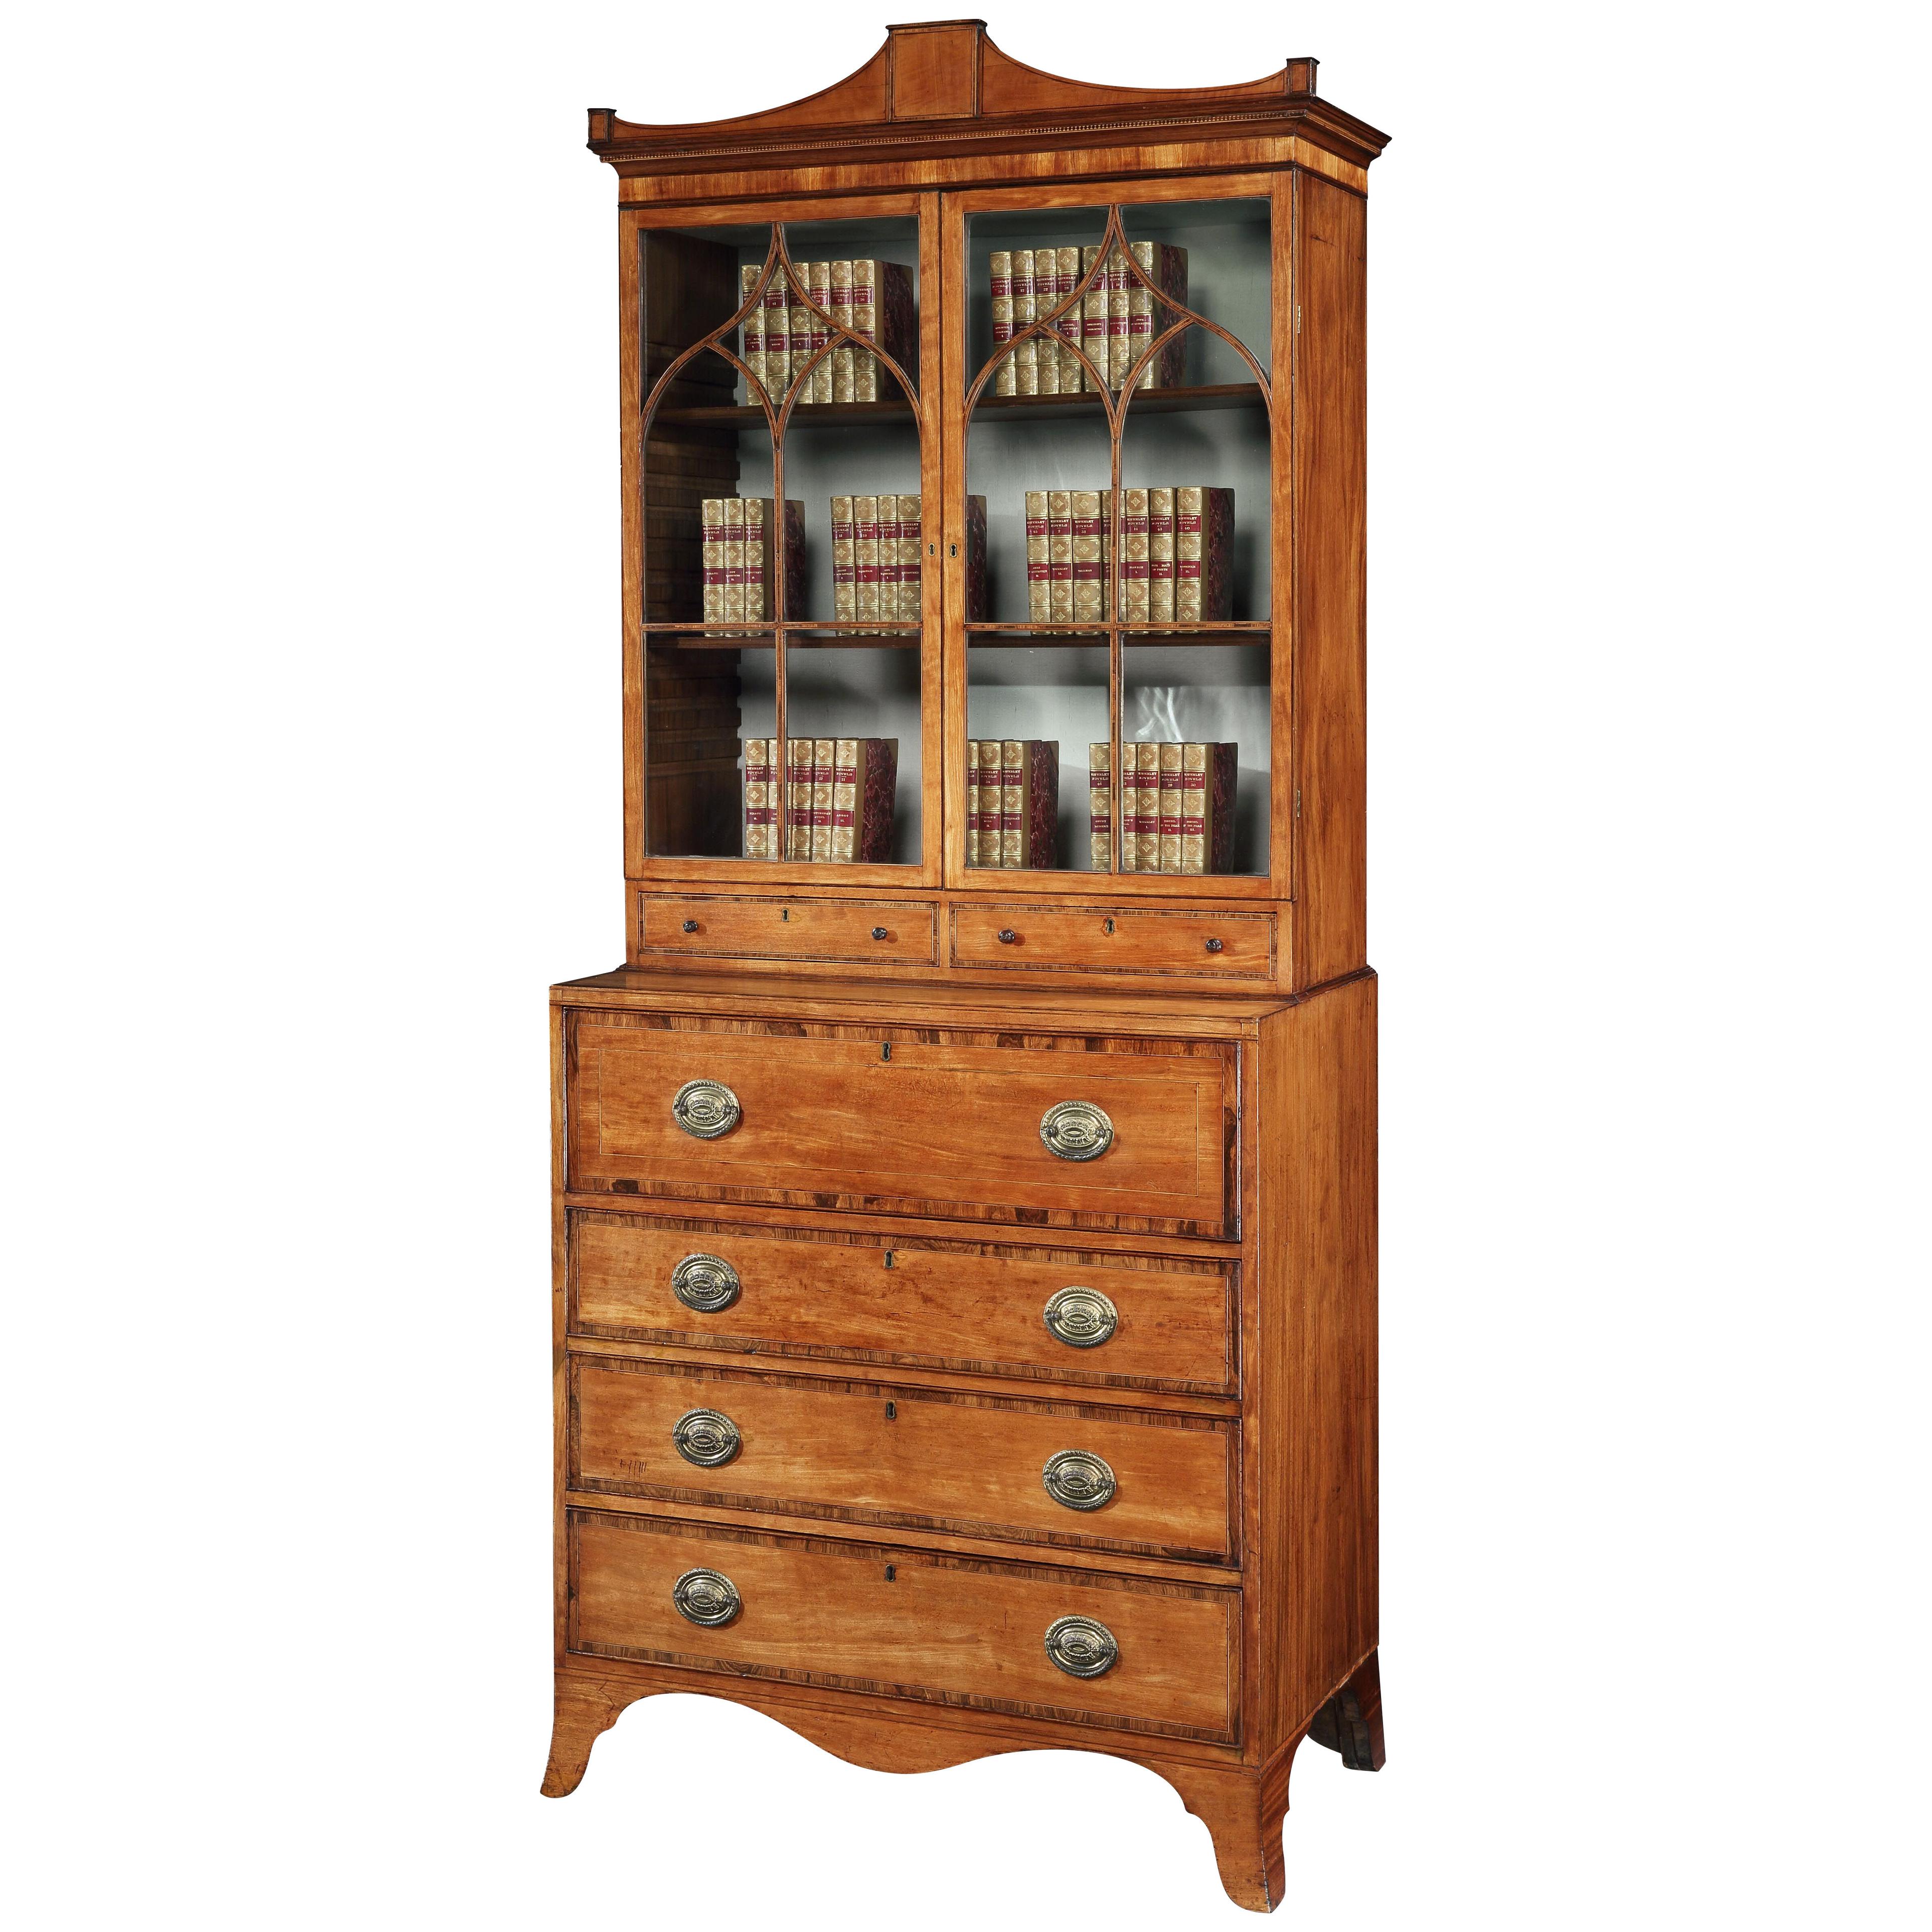 A George III satinwood secretaire bookcase